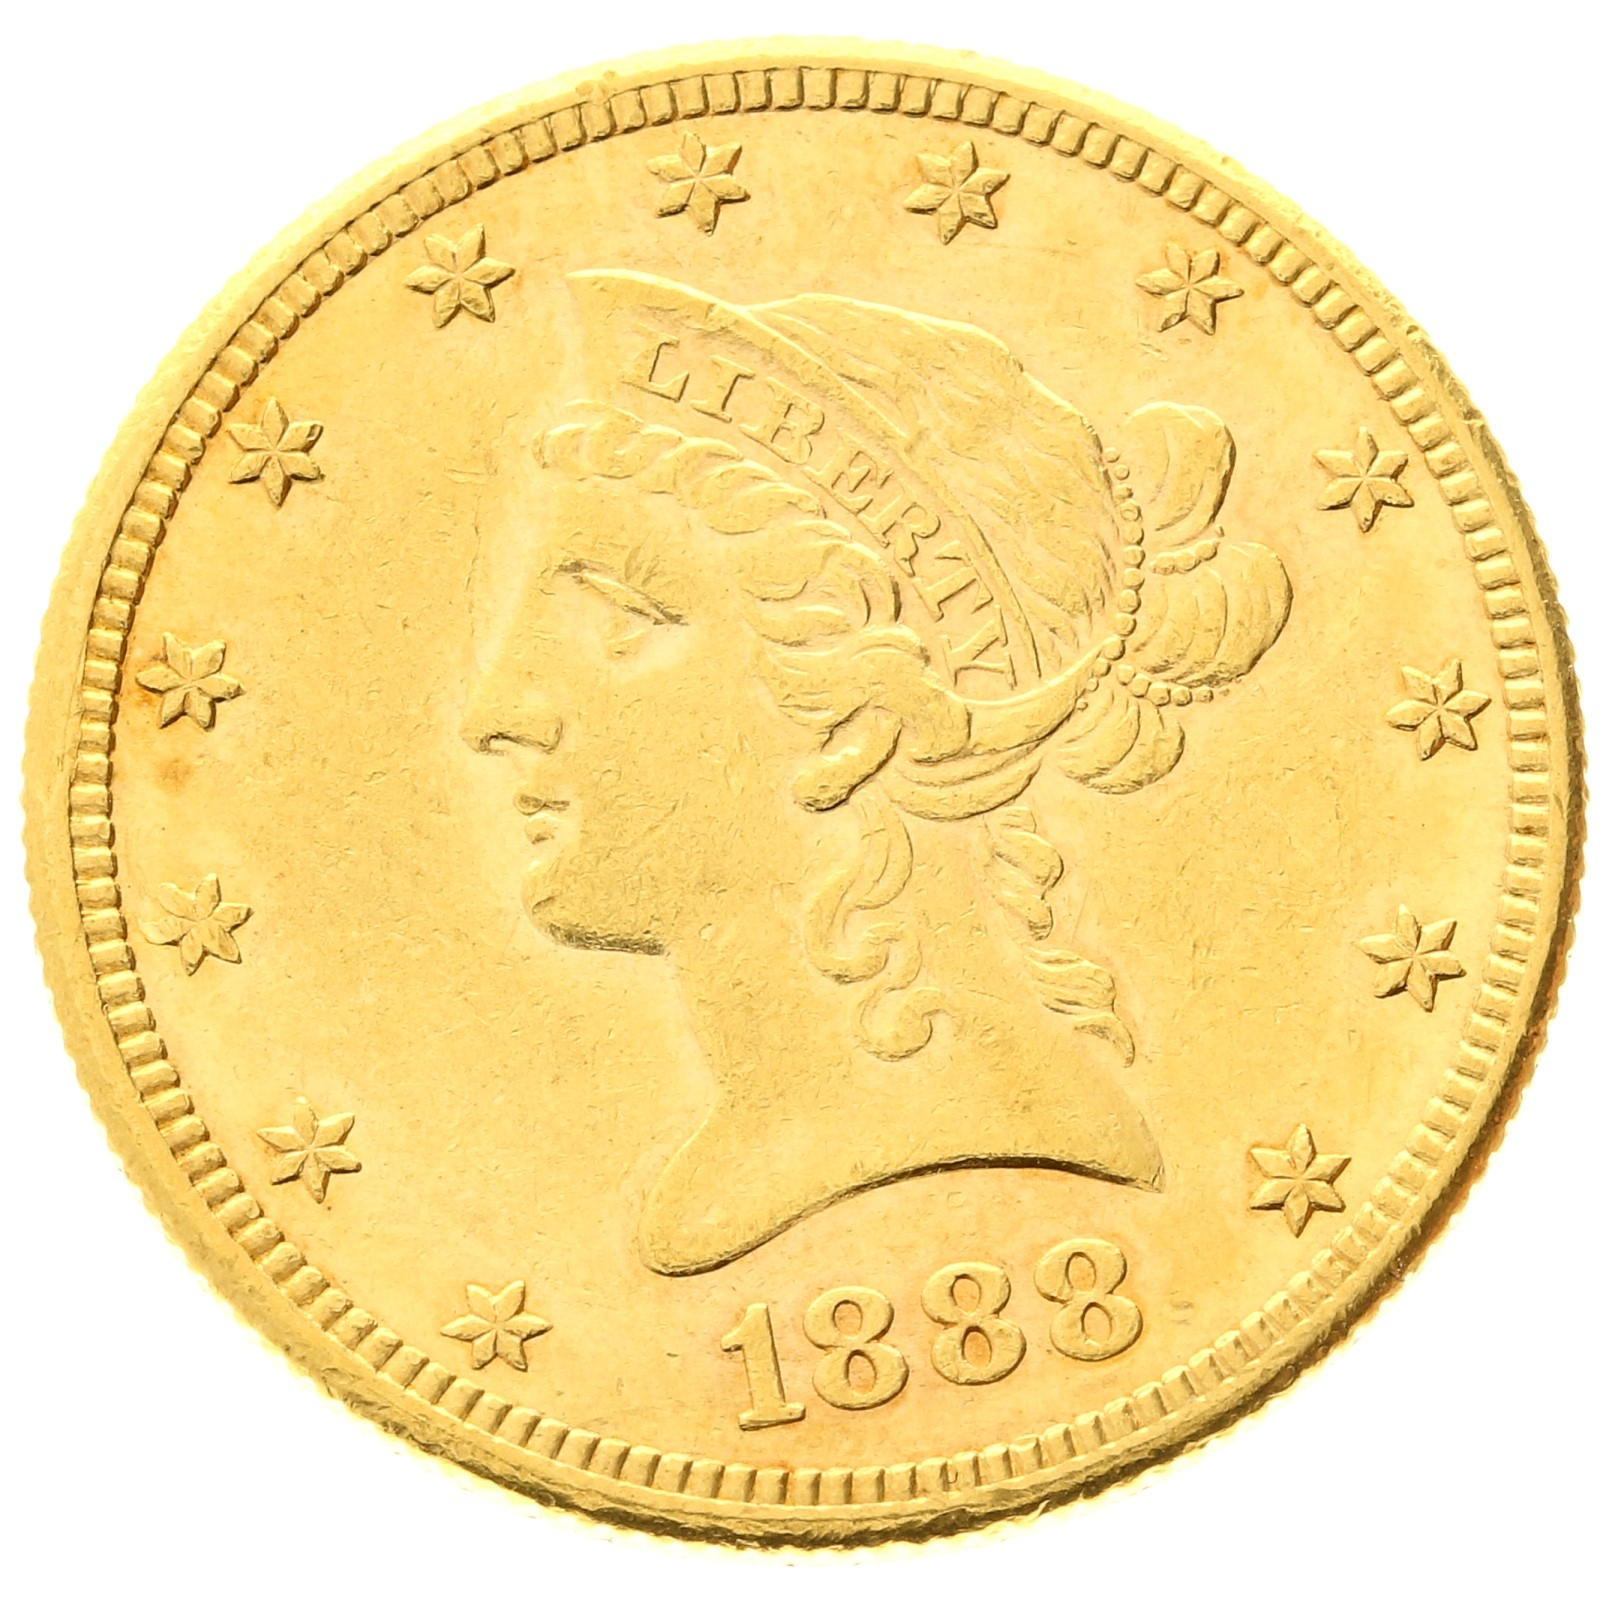 USA - 10 dollars - 1888 - S - Coronet Head Eagle 